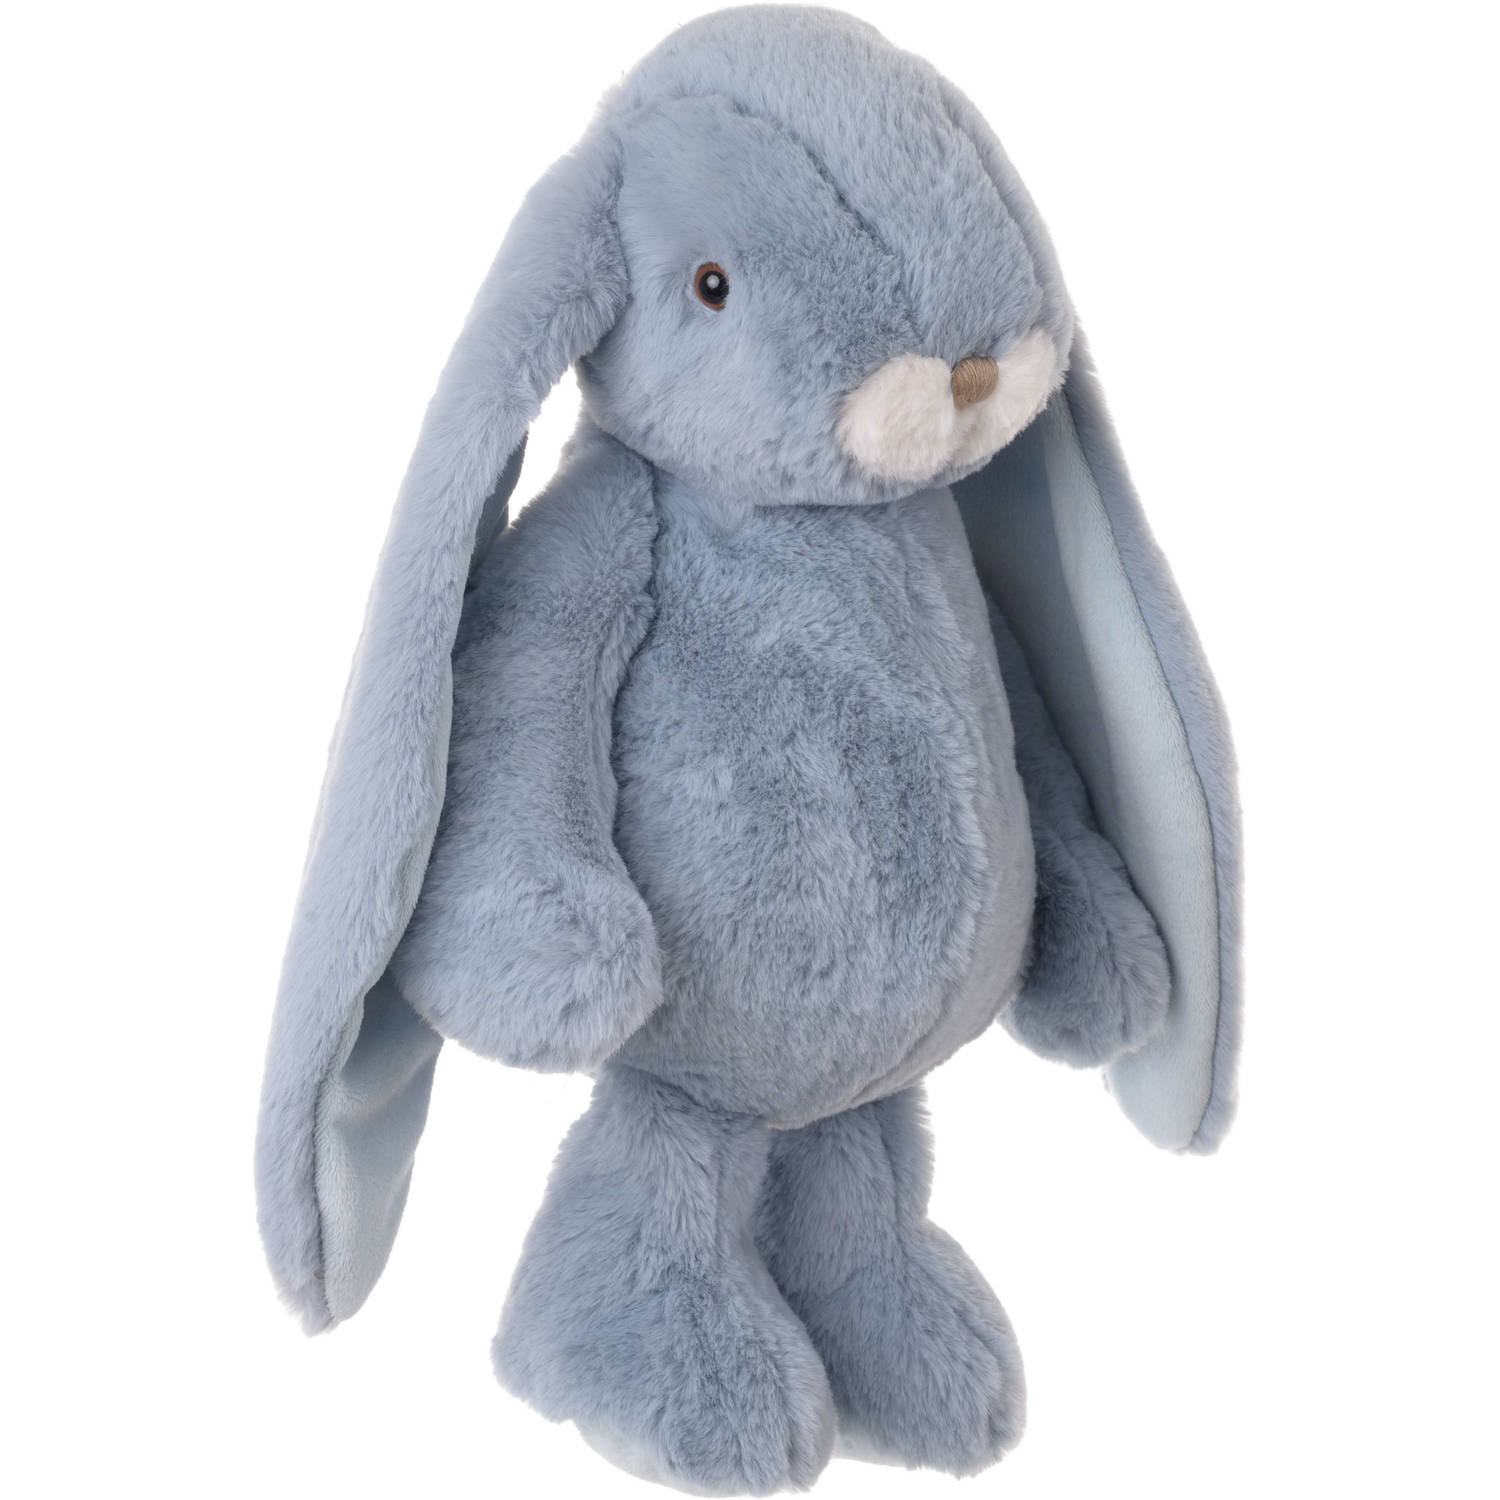 Bukowski pluche konijn knuffeldier - lichtblauw - staand - 40 cm - Luxe kwaliteit knuffels